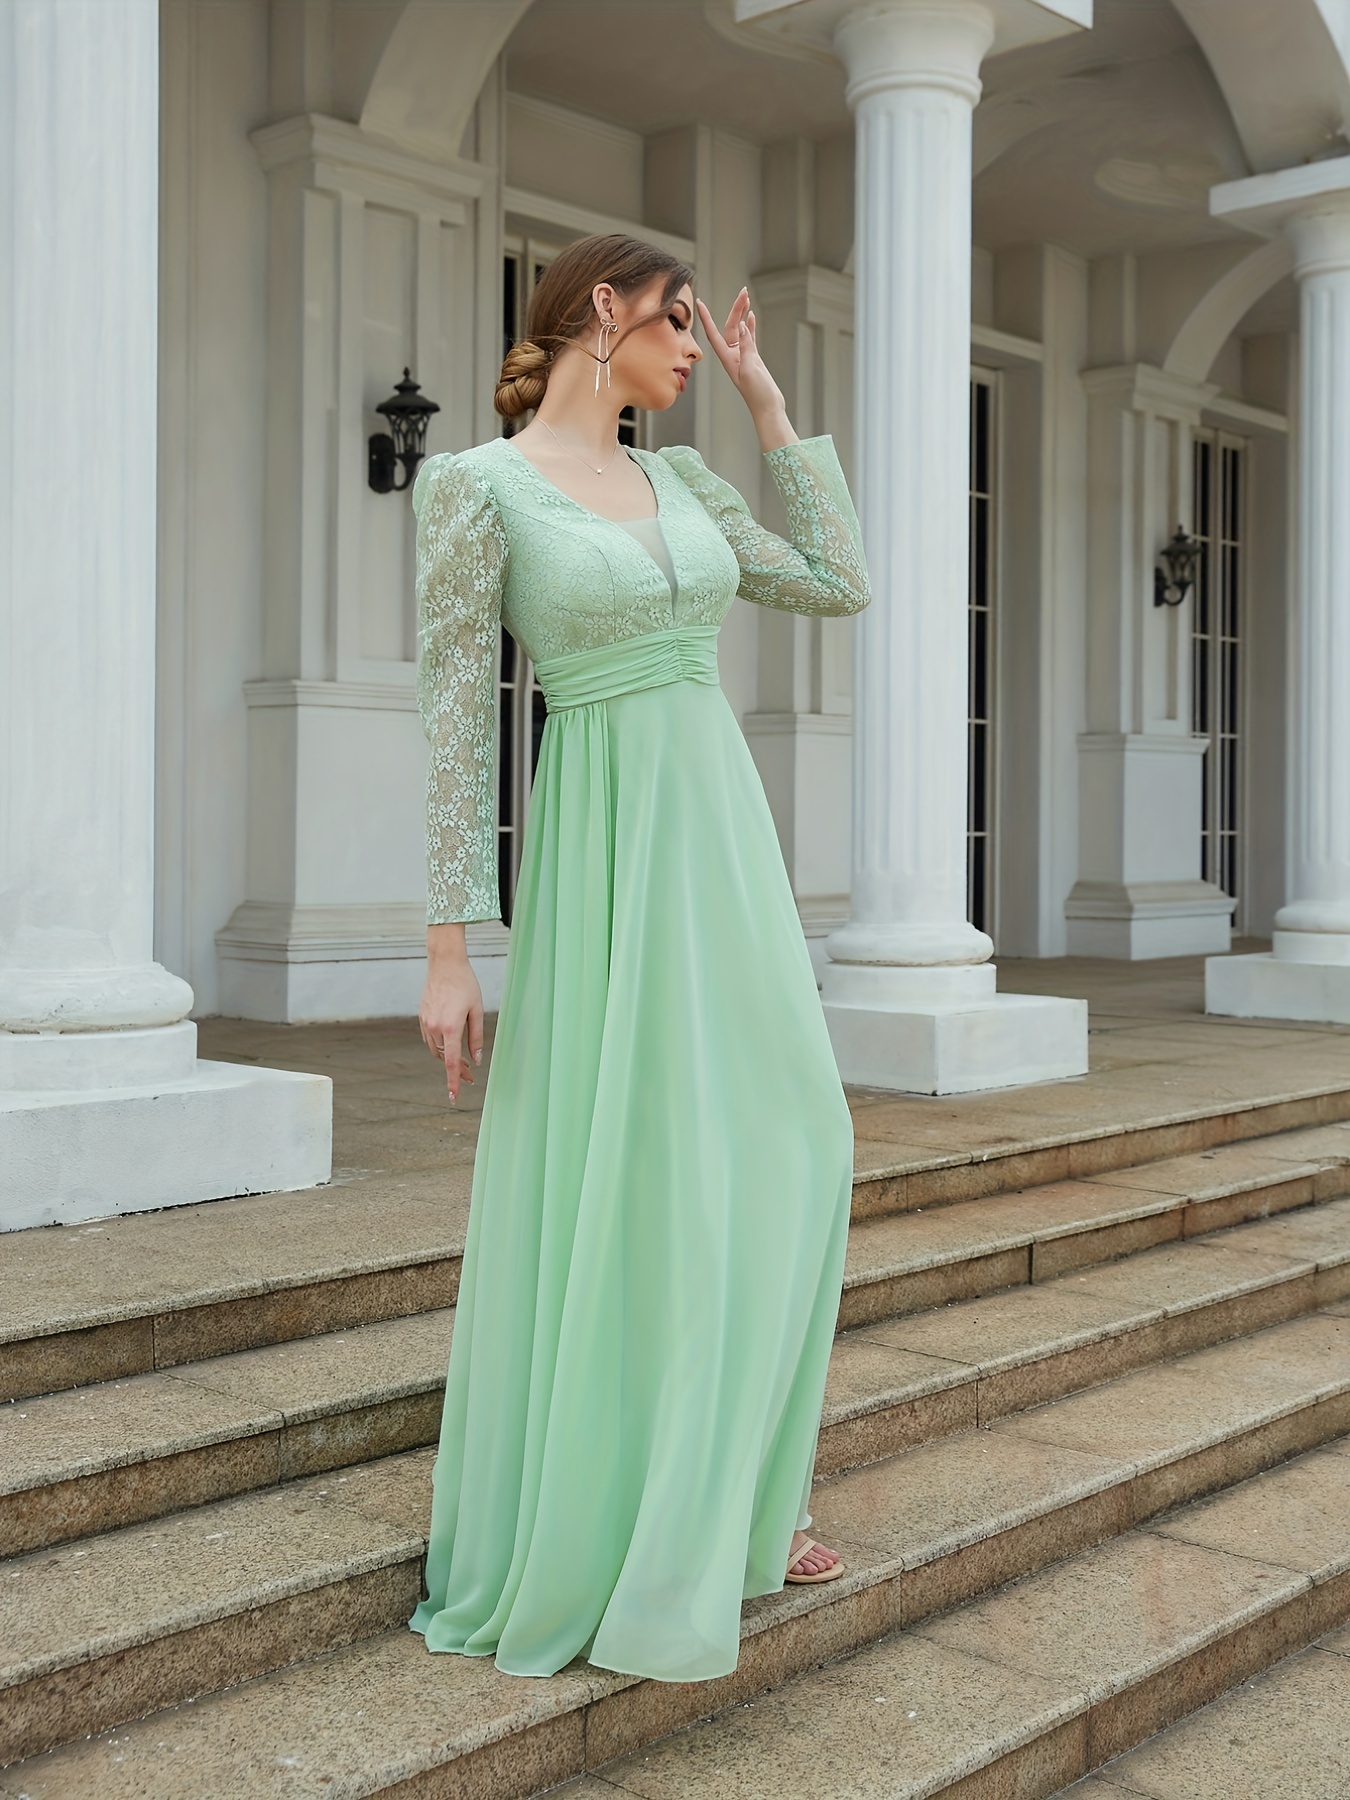 Sleeve Layer Hem Lace Dress Vestido Vestido de Sol de Praia (Color : Mint  Green, Size : S)